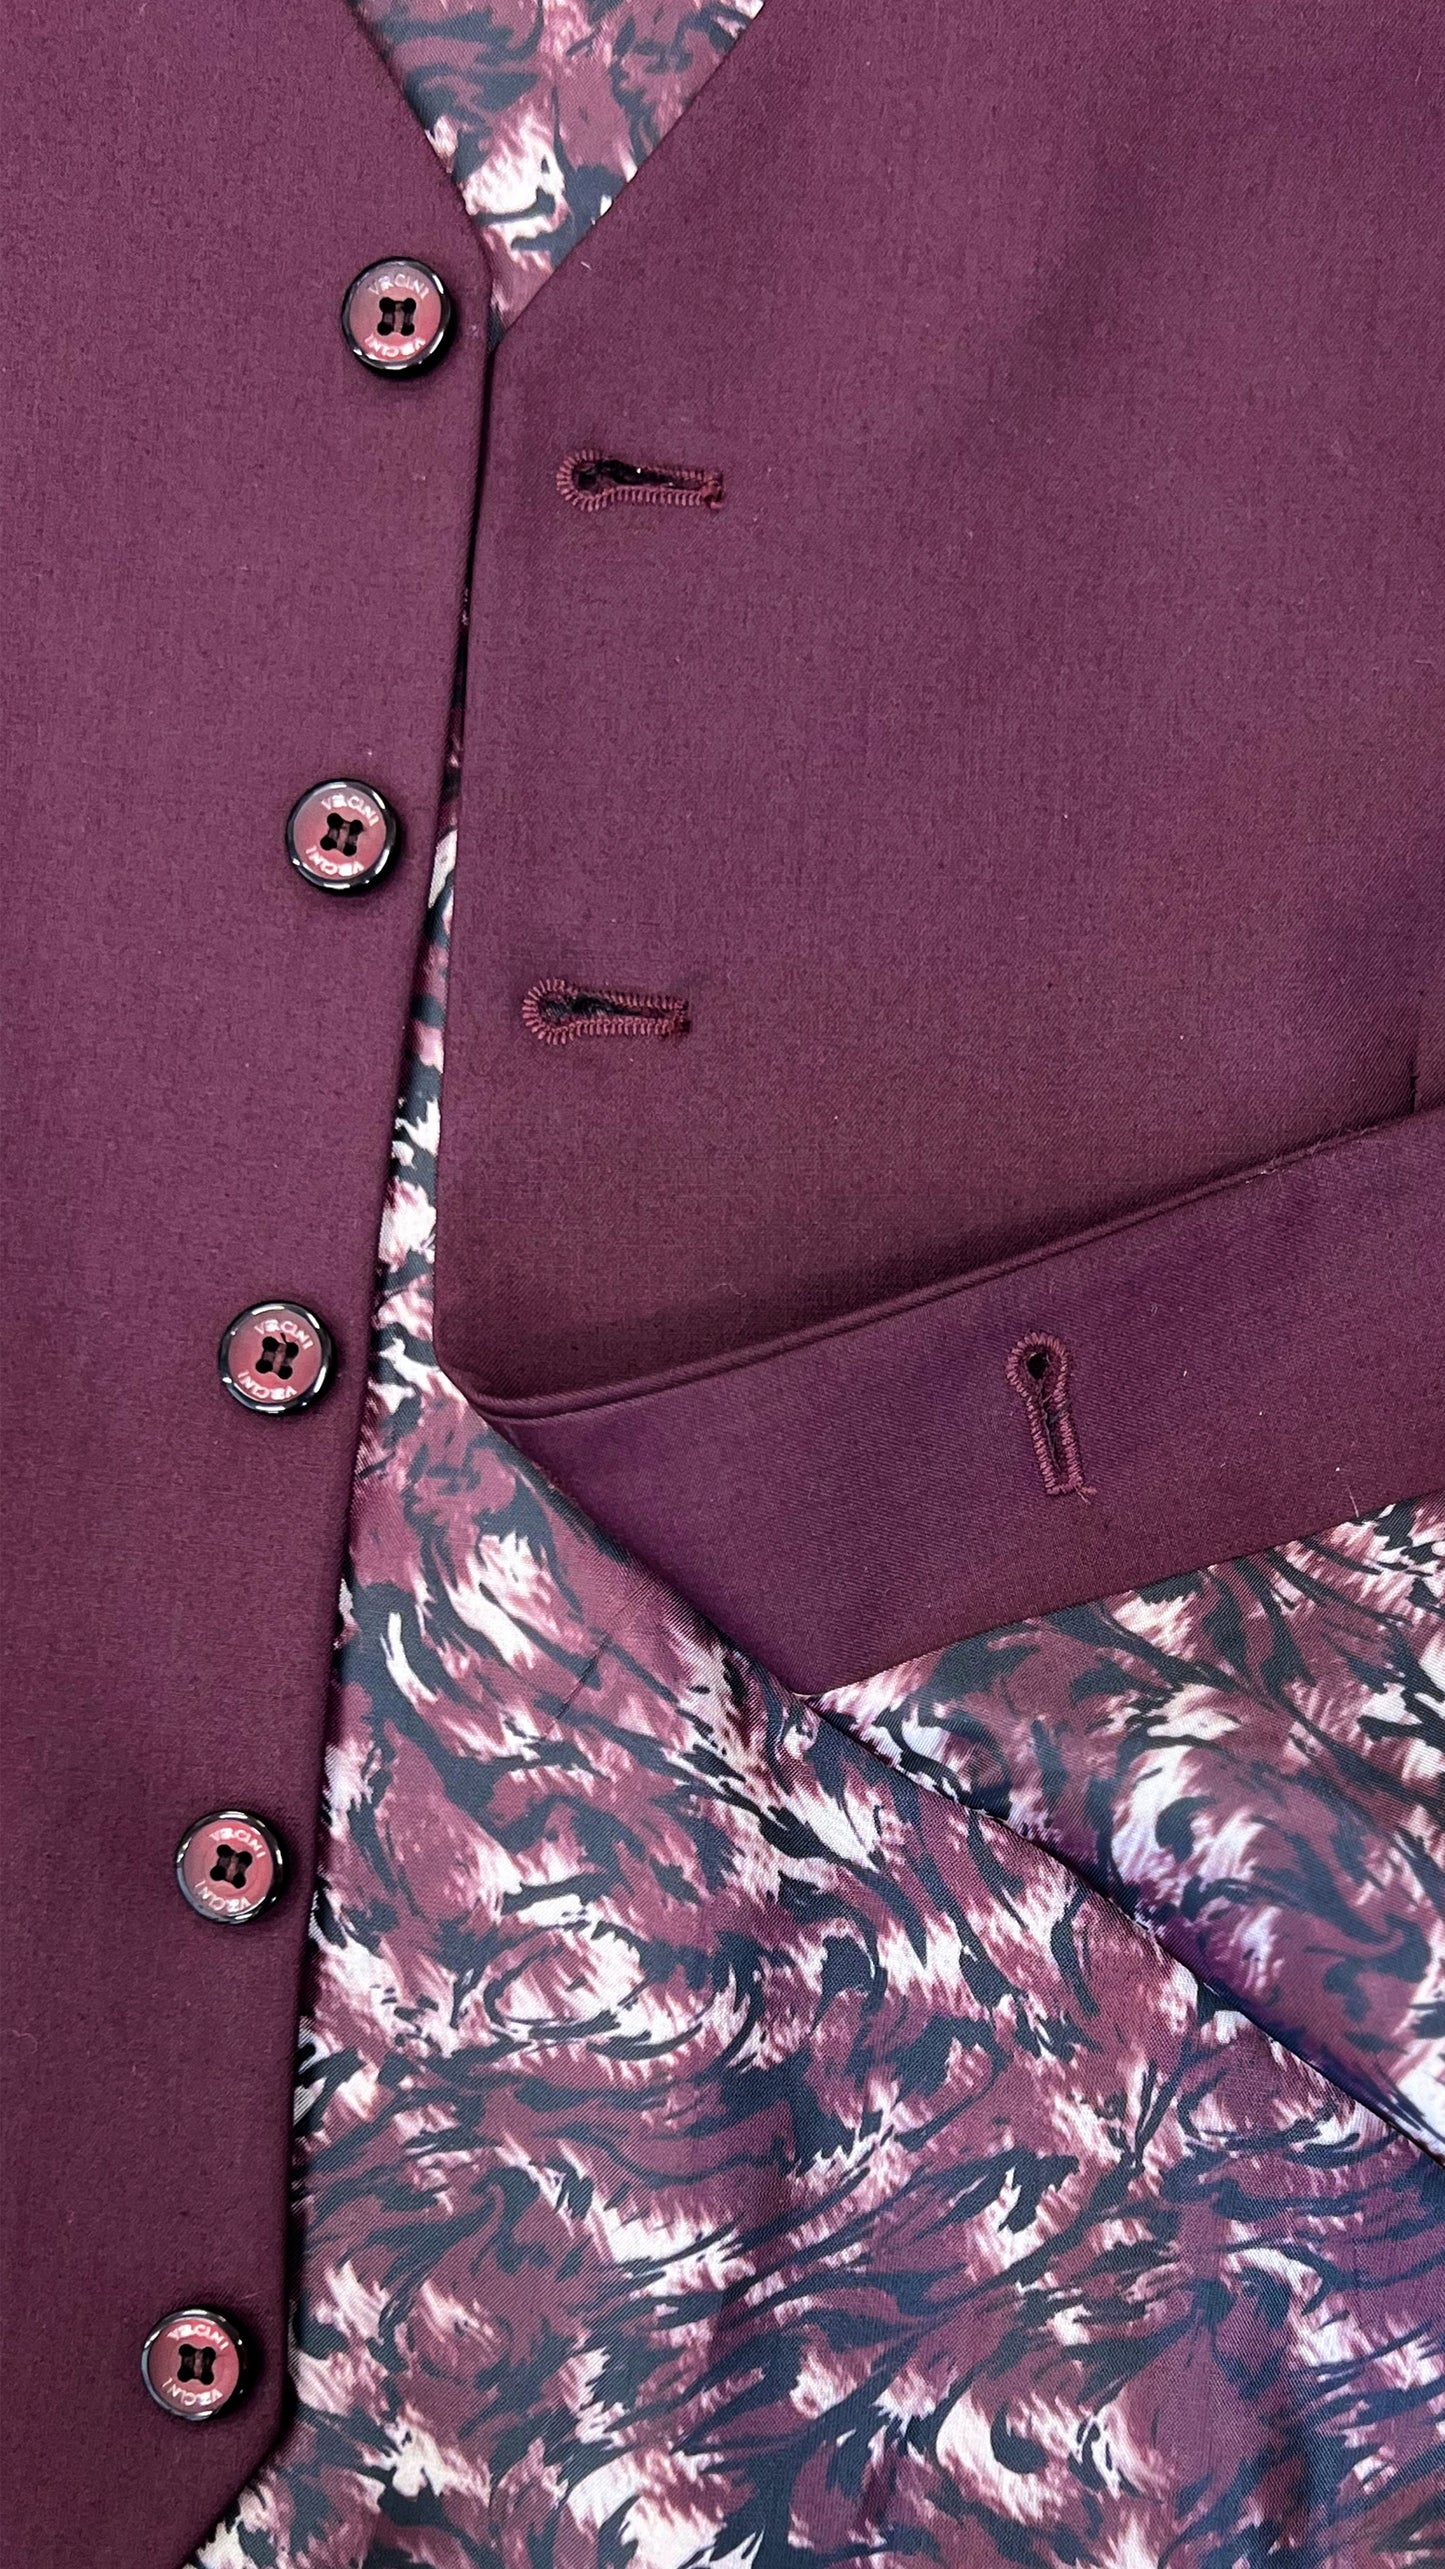 Vercini Premium Burgundy 3-Piece Men's Suit with Patterned Lining